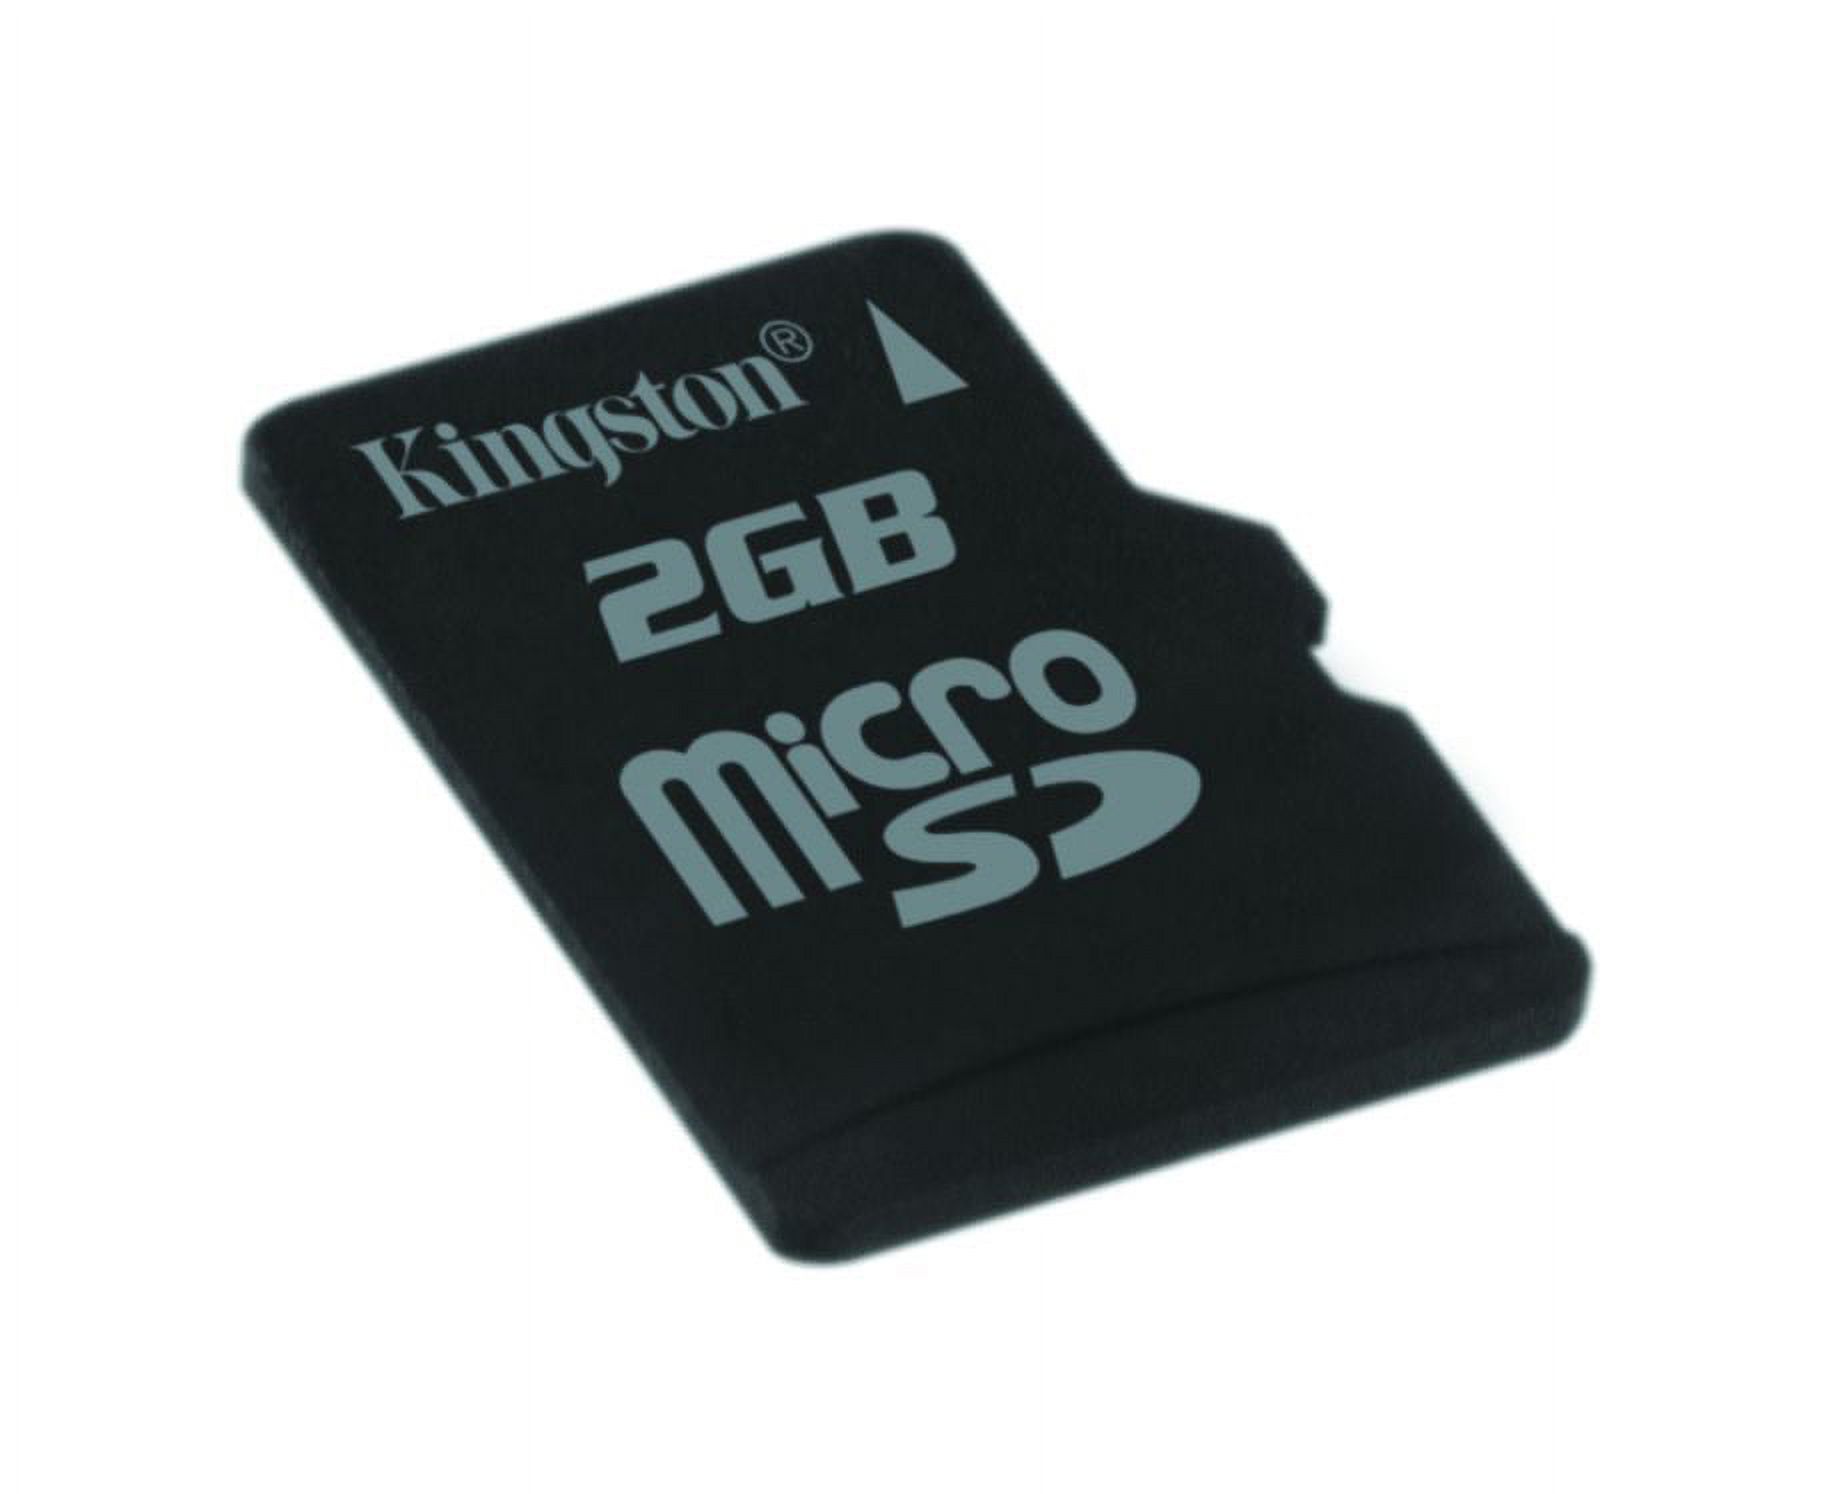 Kingston 2GB microSD Card - image 2 of 2